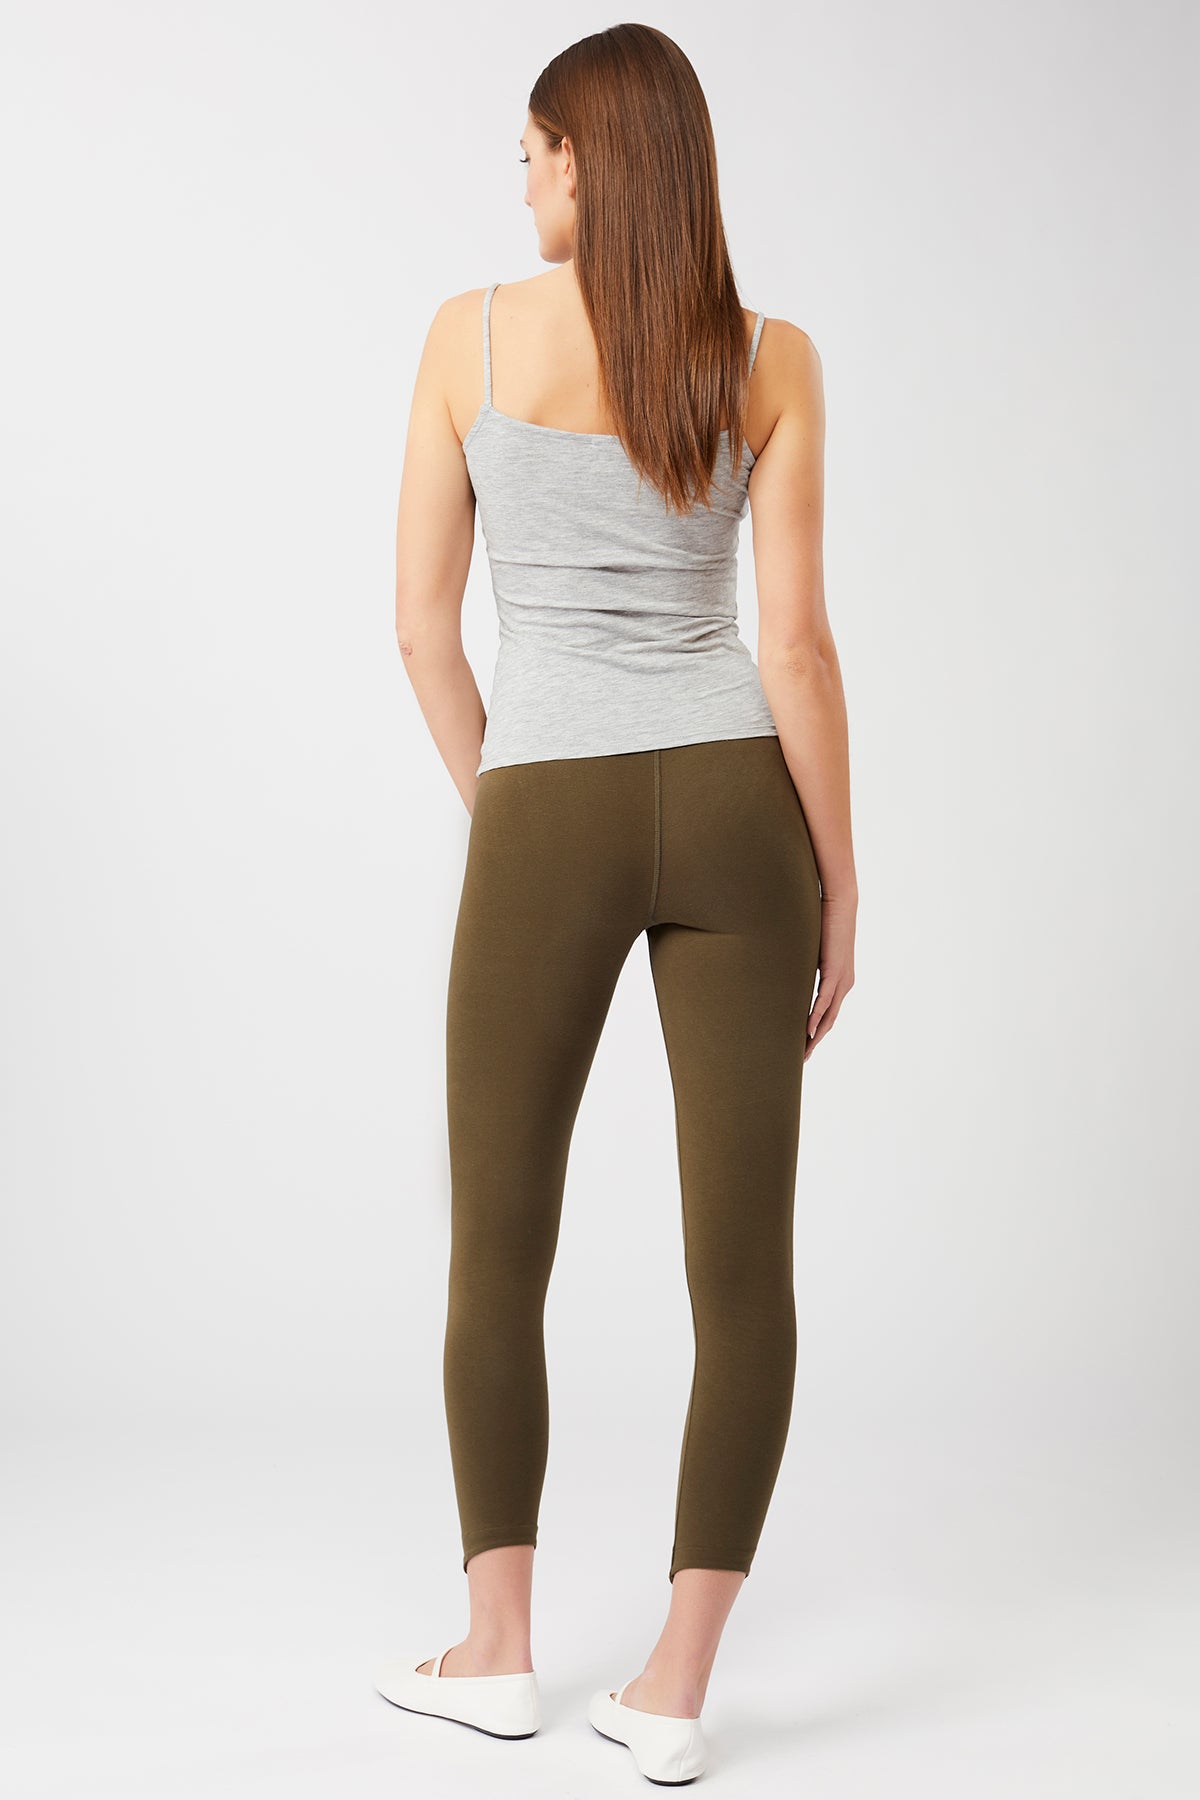 Mandala Yoga Top Grau Outfit Rückseite - Holly Top